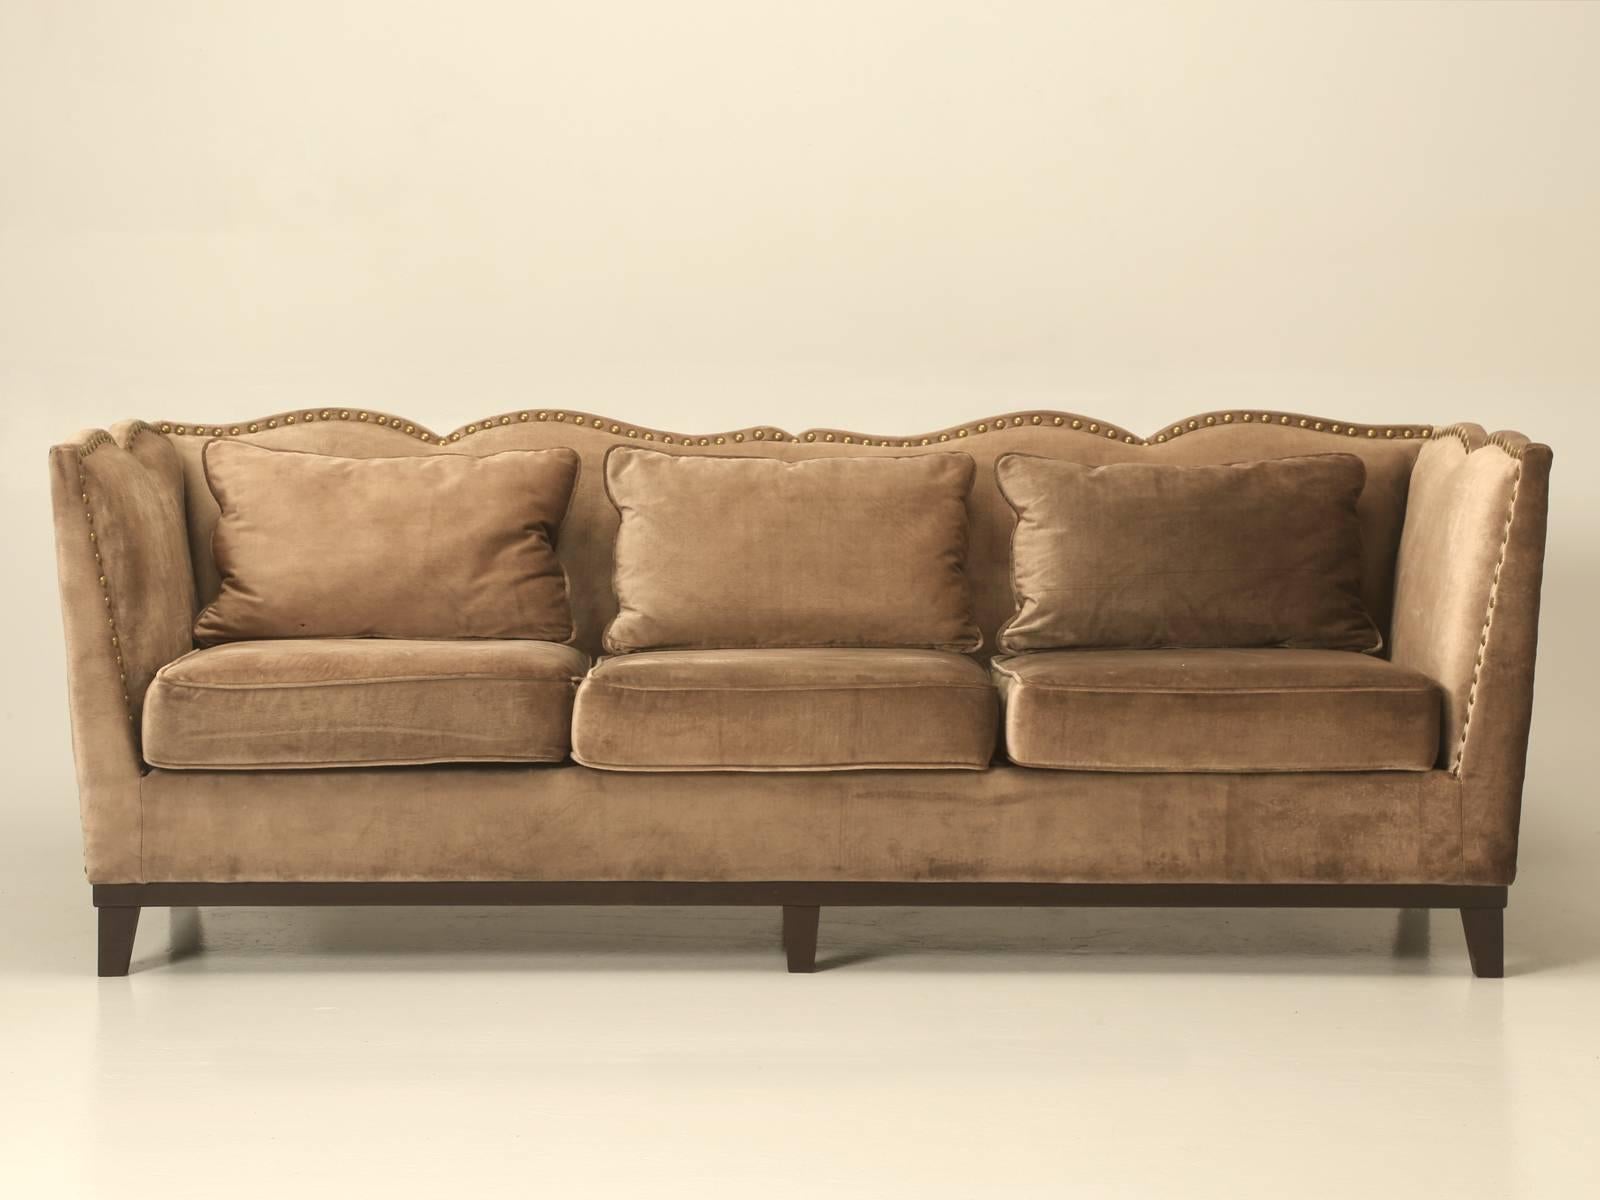 Reproduction Sofa with Nailhead Trim 2